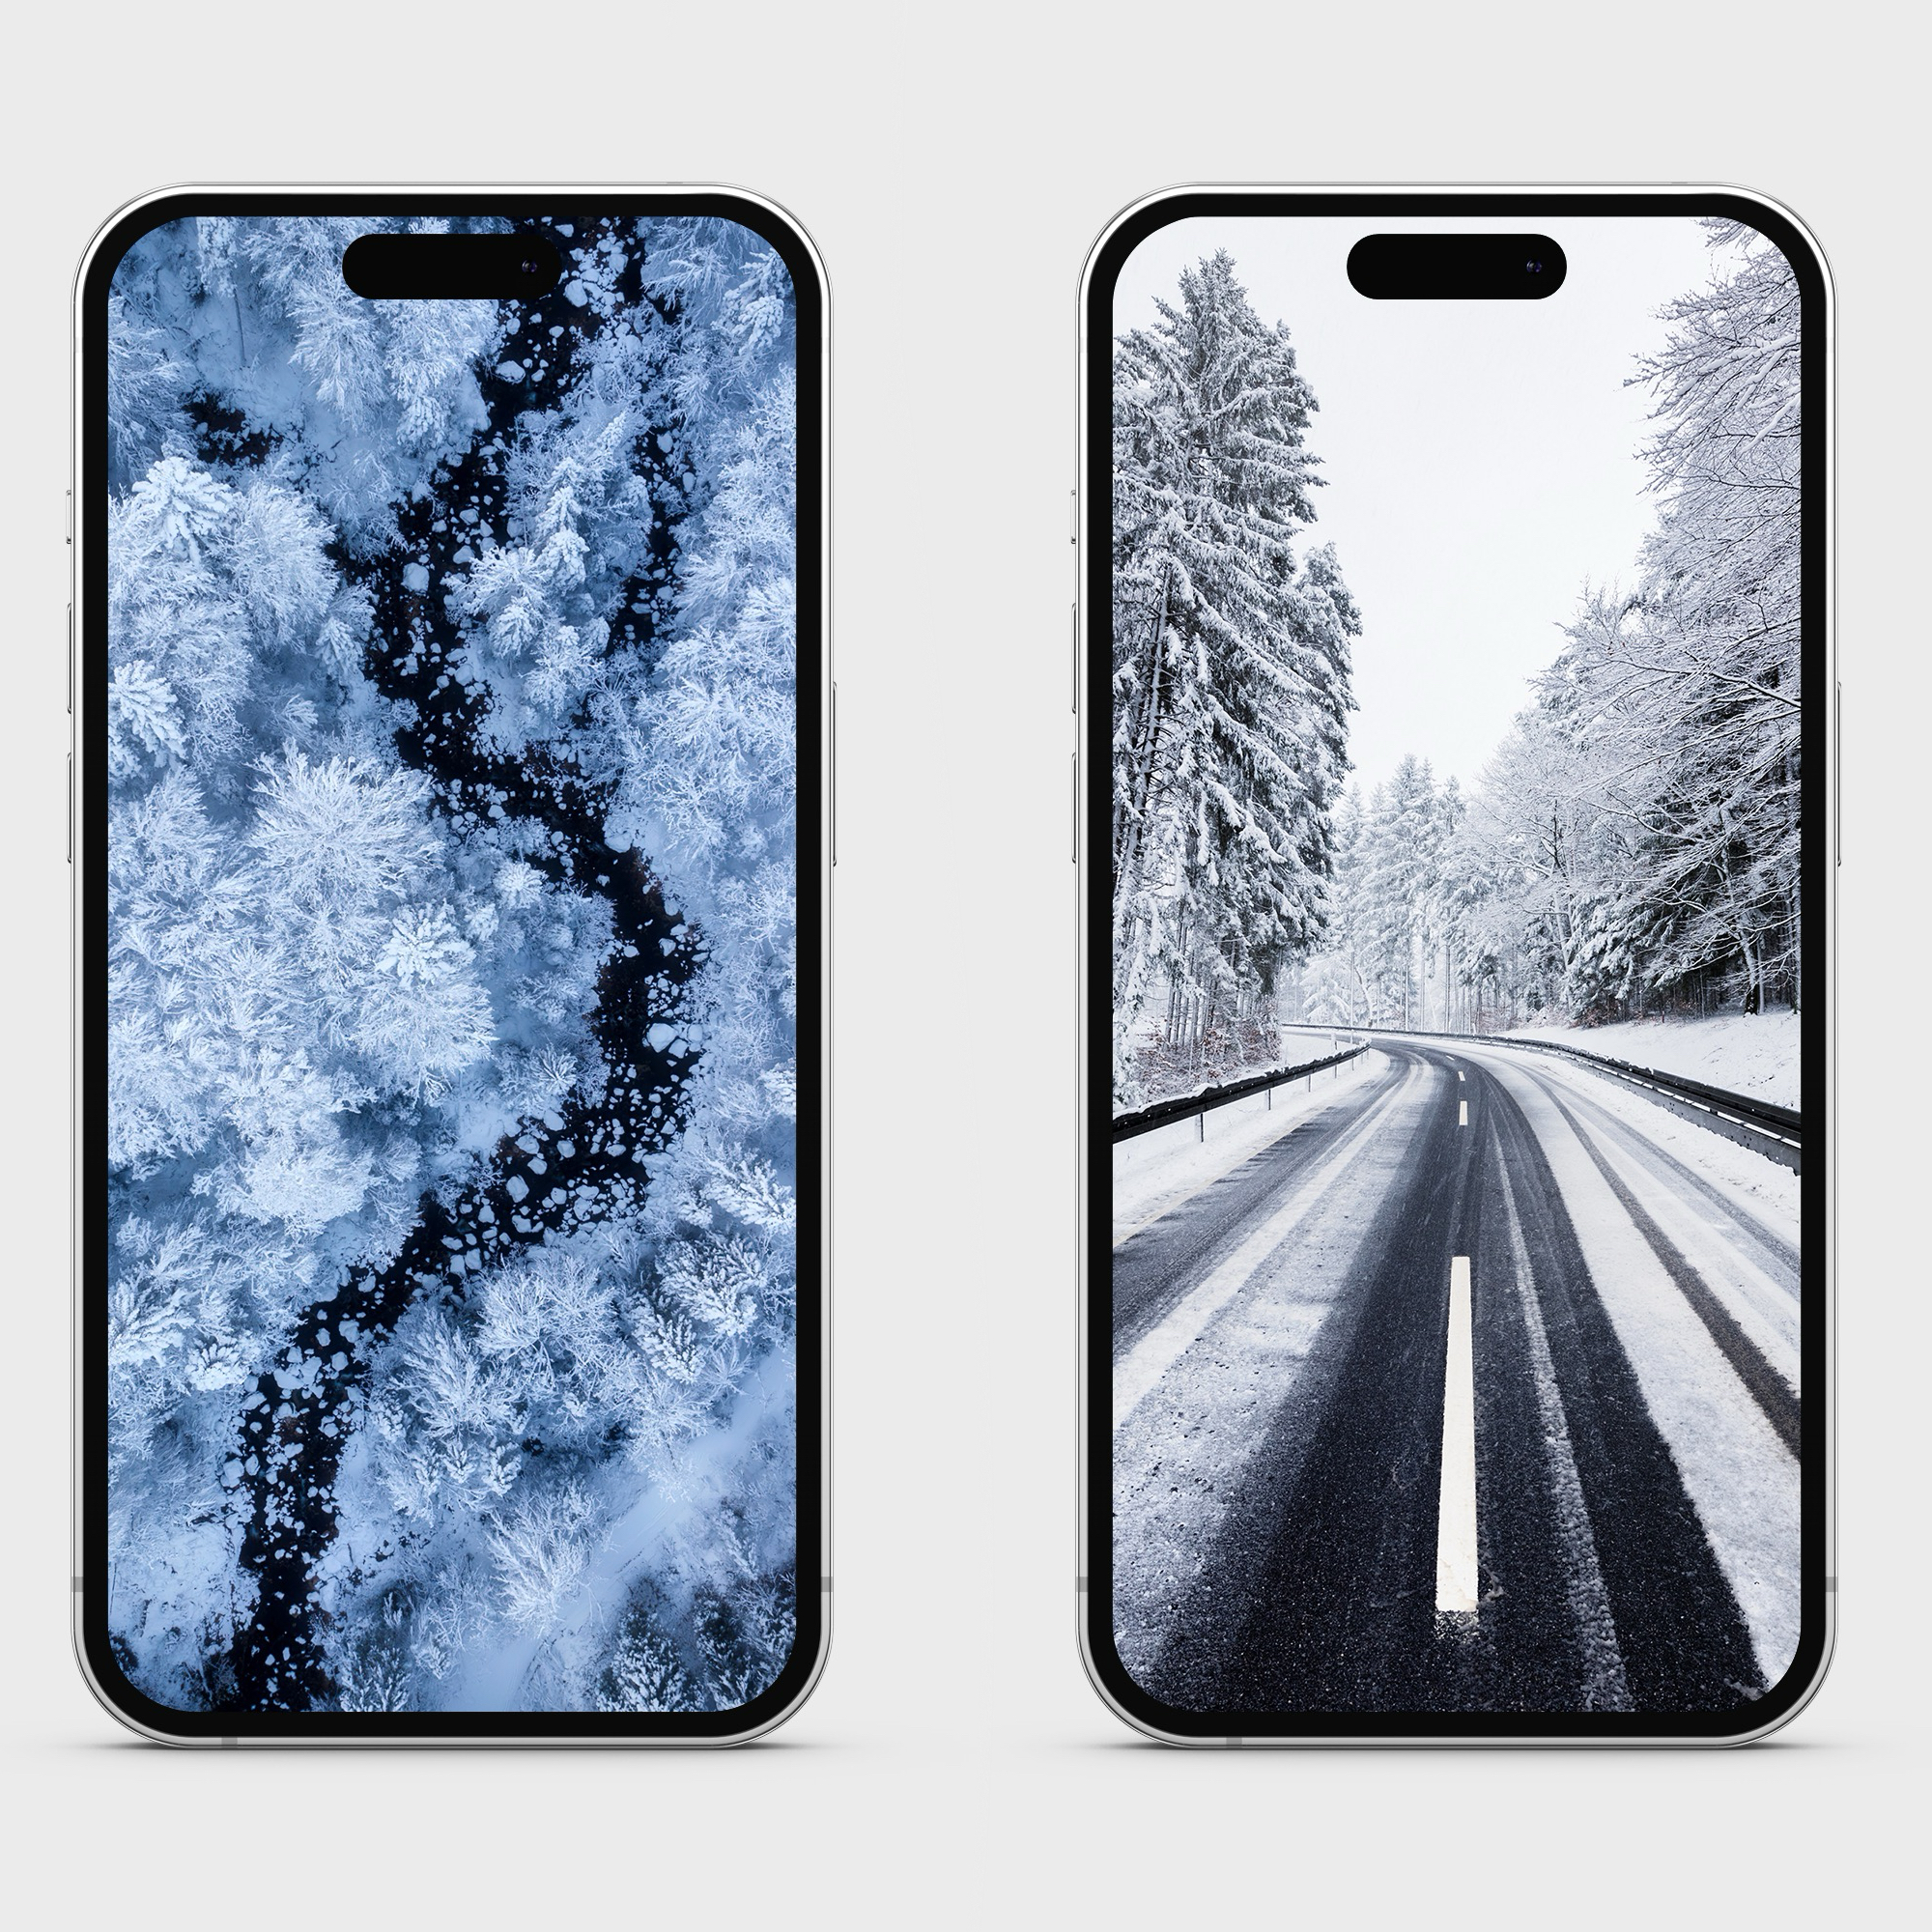 10 зимних обоев для iPhone. Города и природа